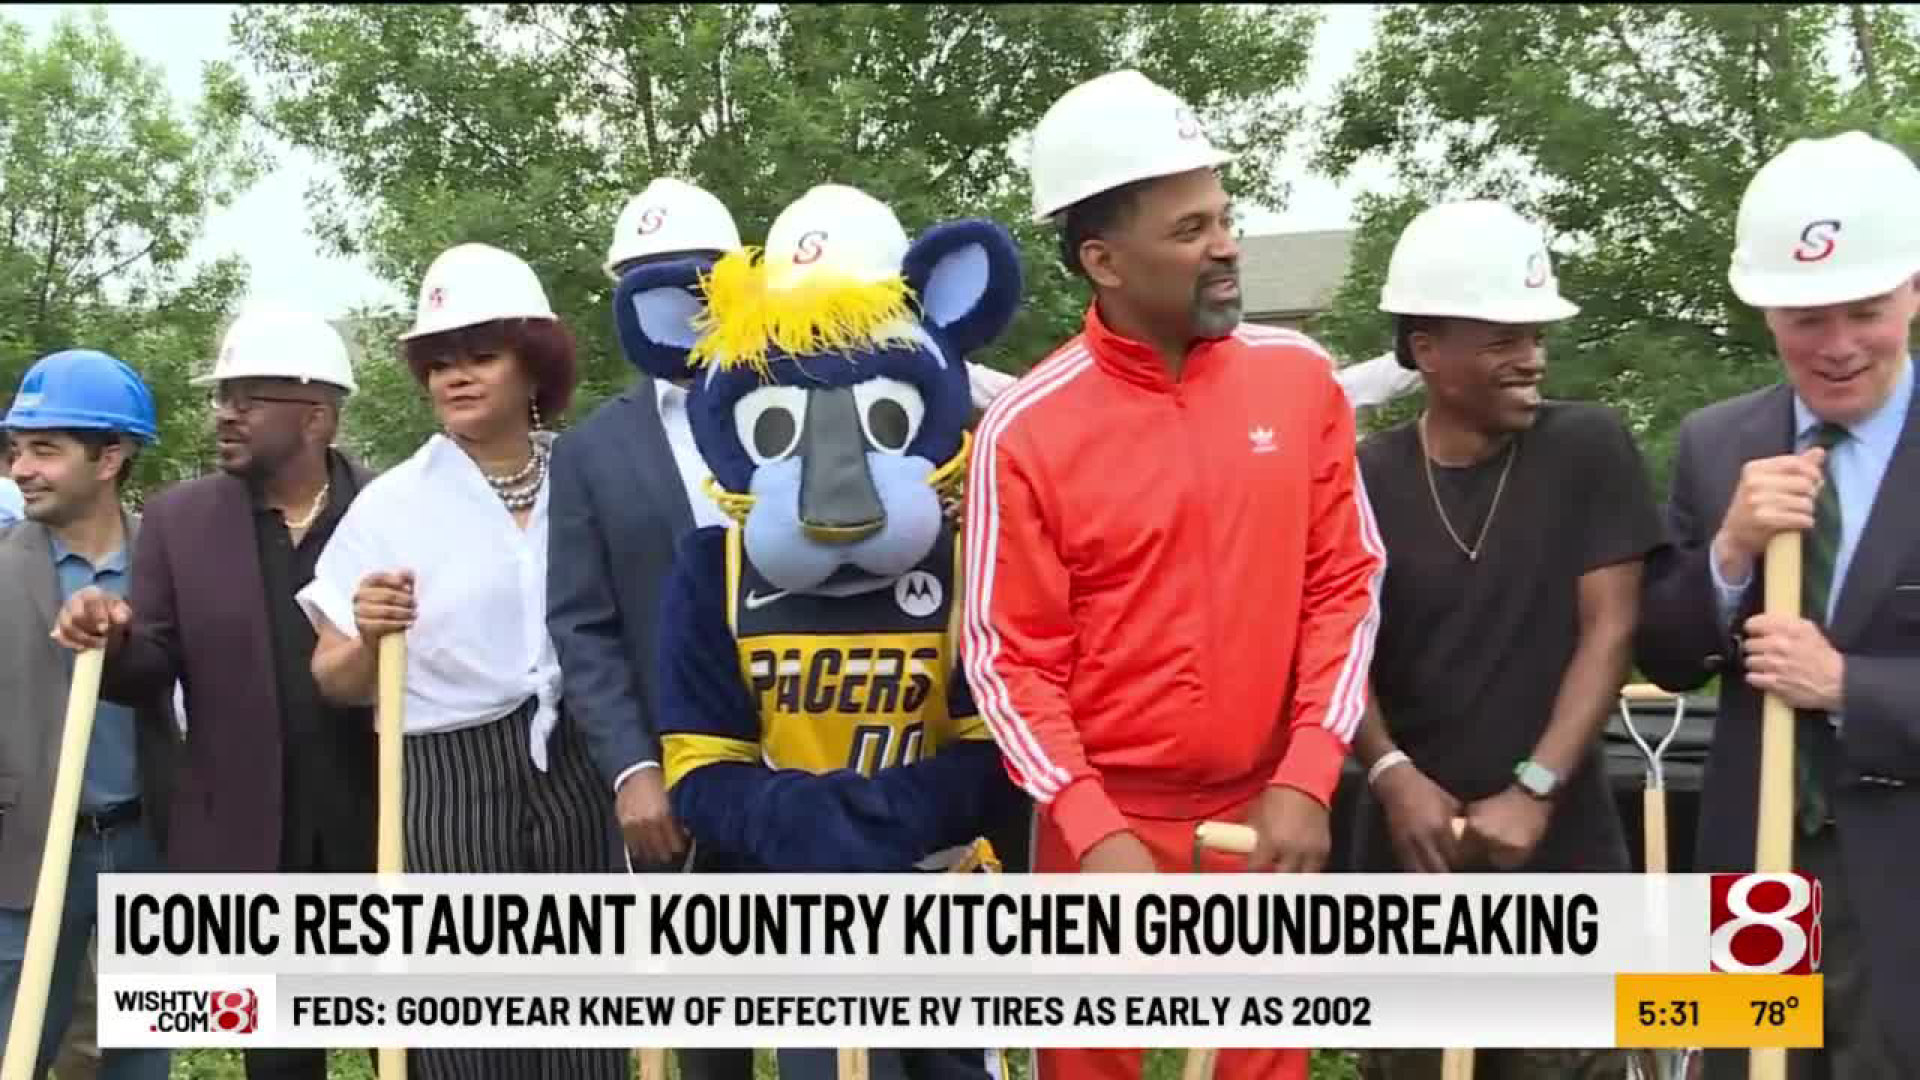 Kountry Kitchen groundbreaking